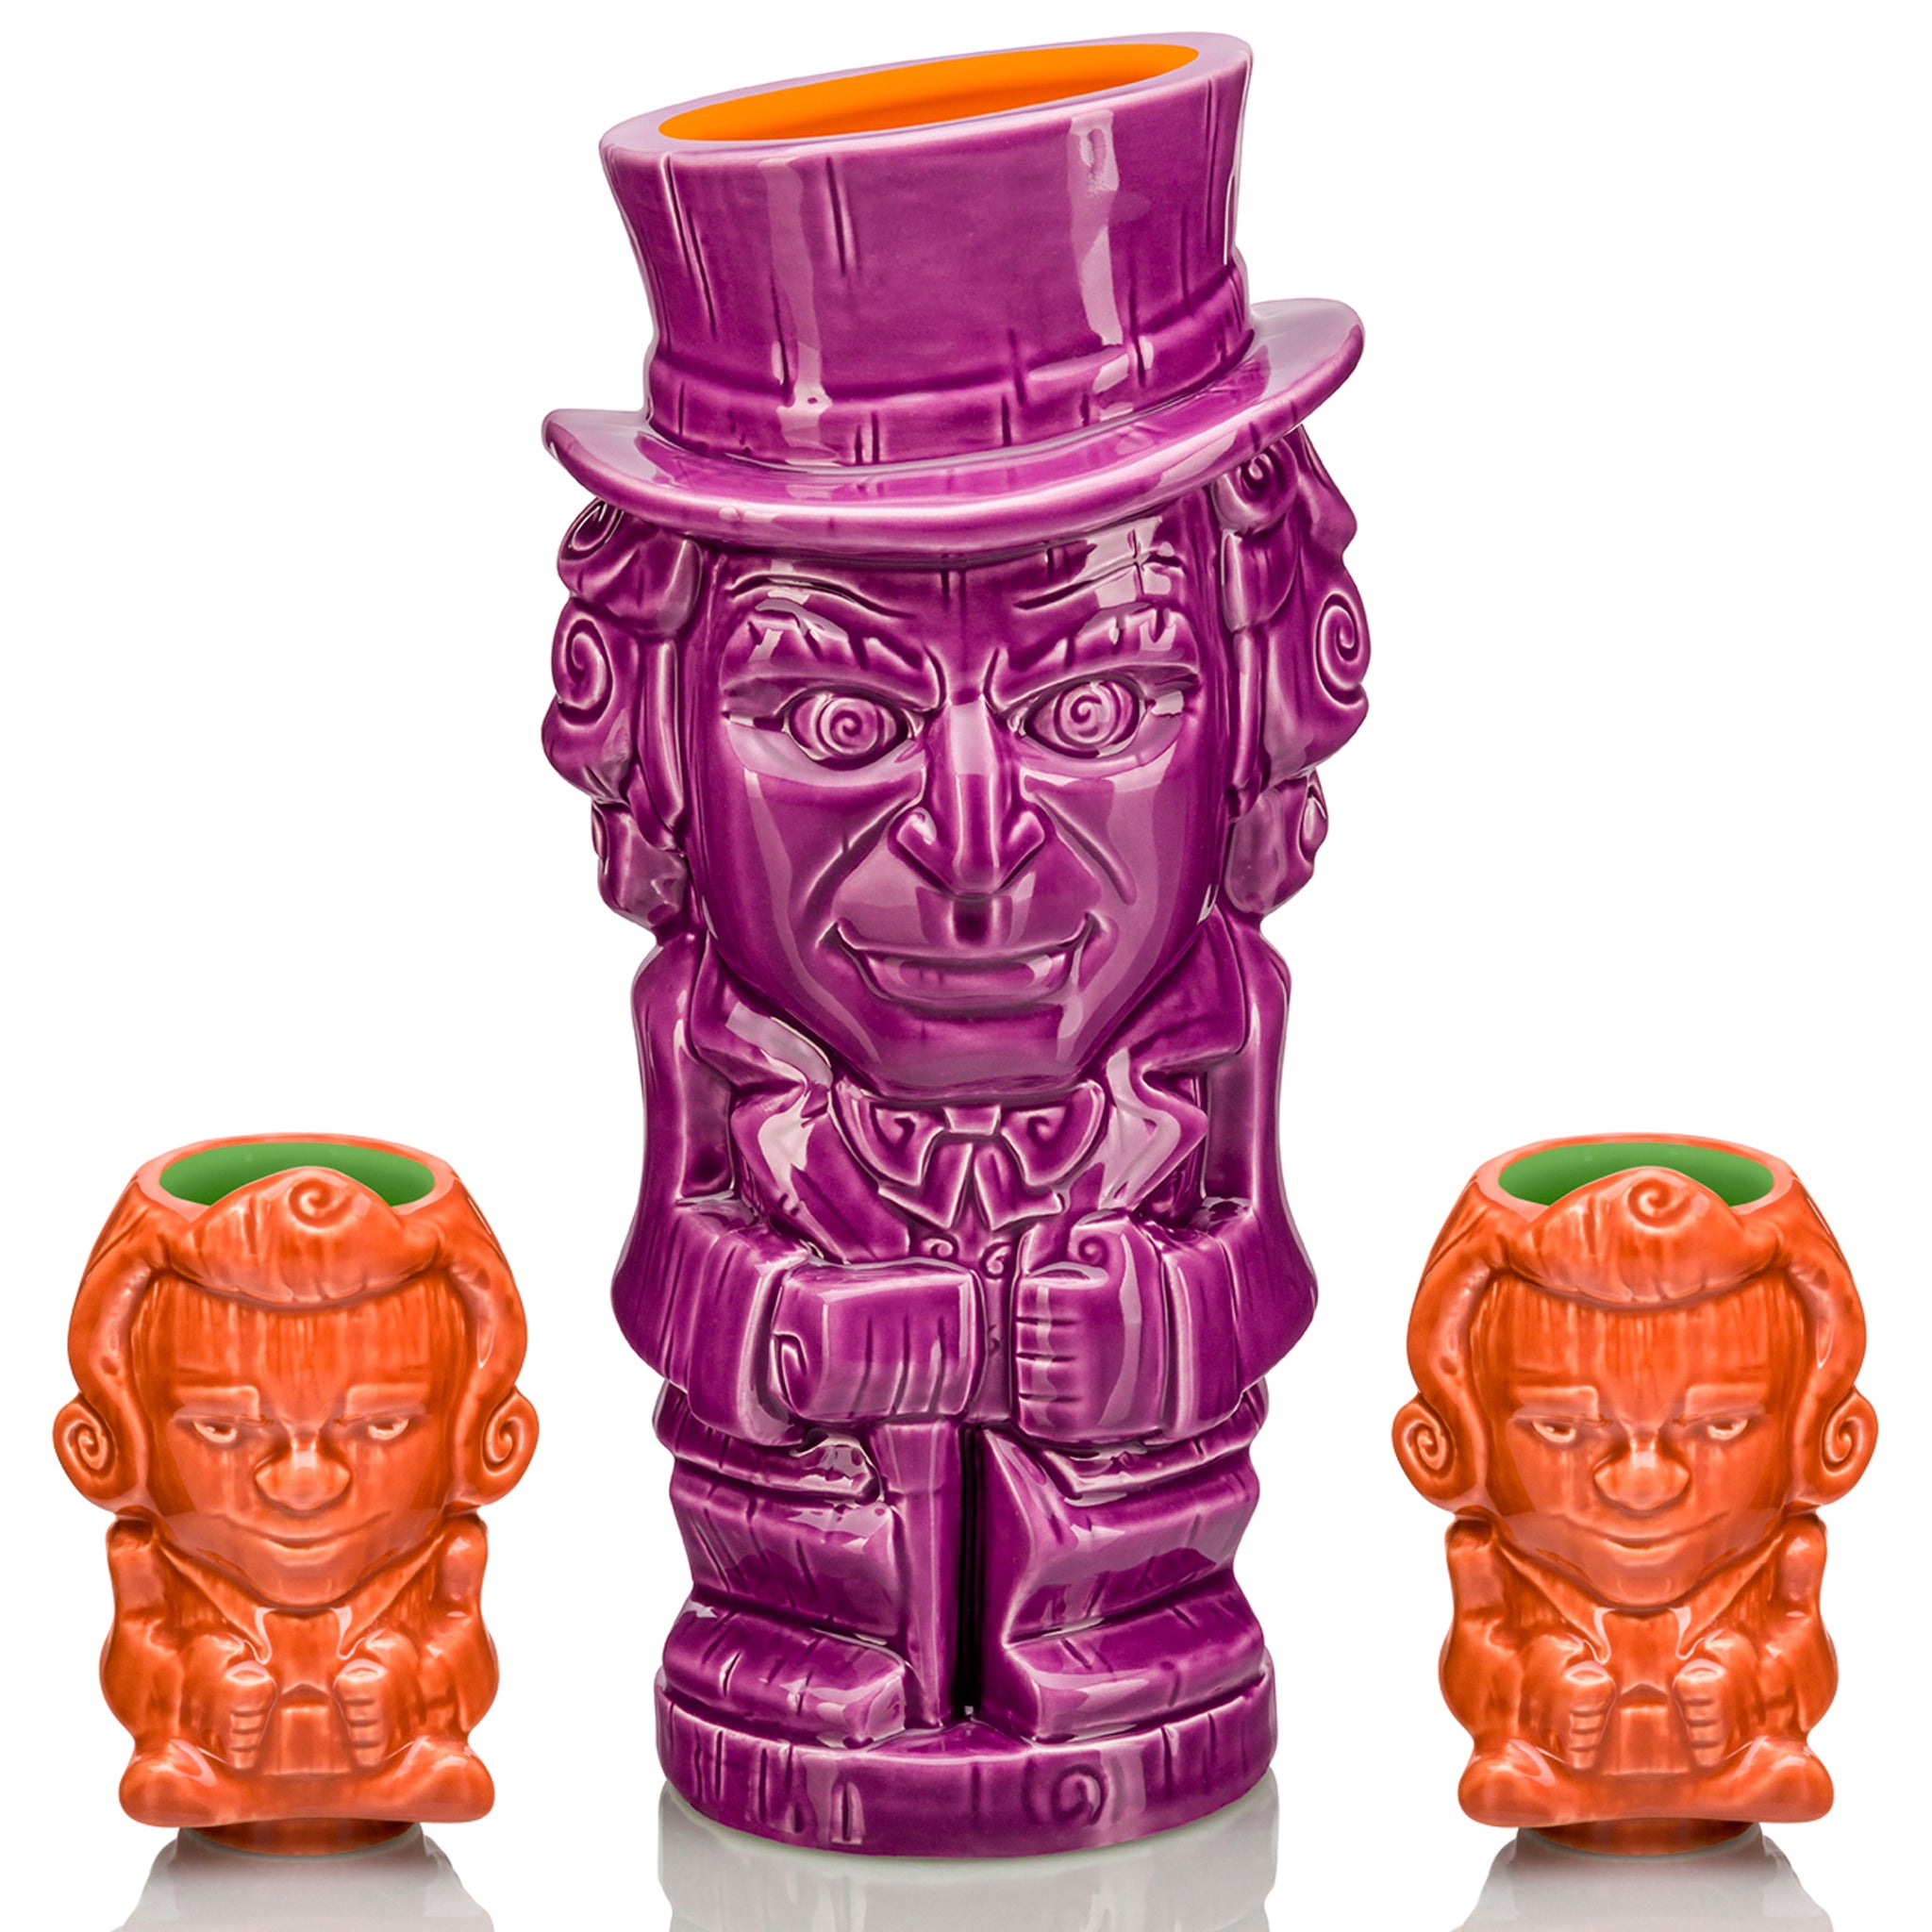 Willy Wonka Gift Set – Beeline Creative, Inc.